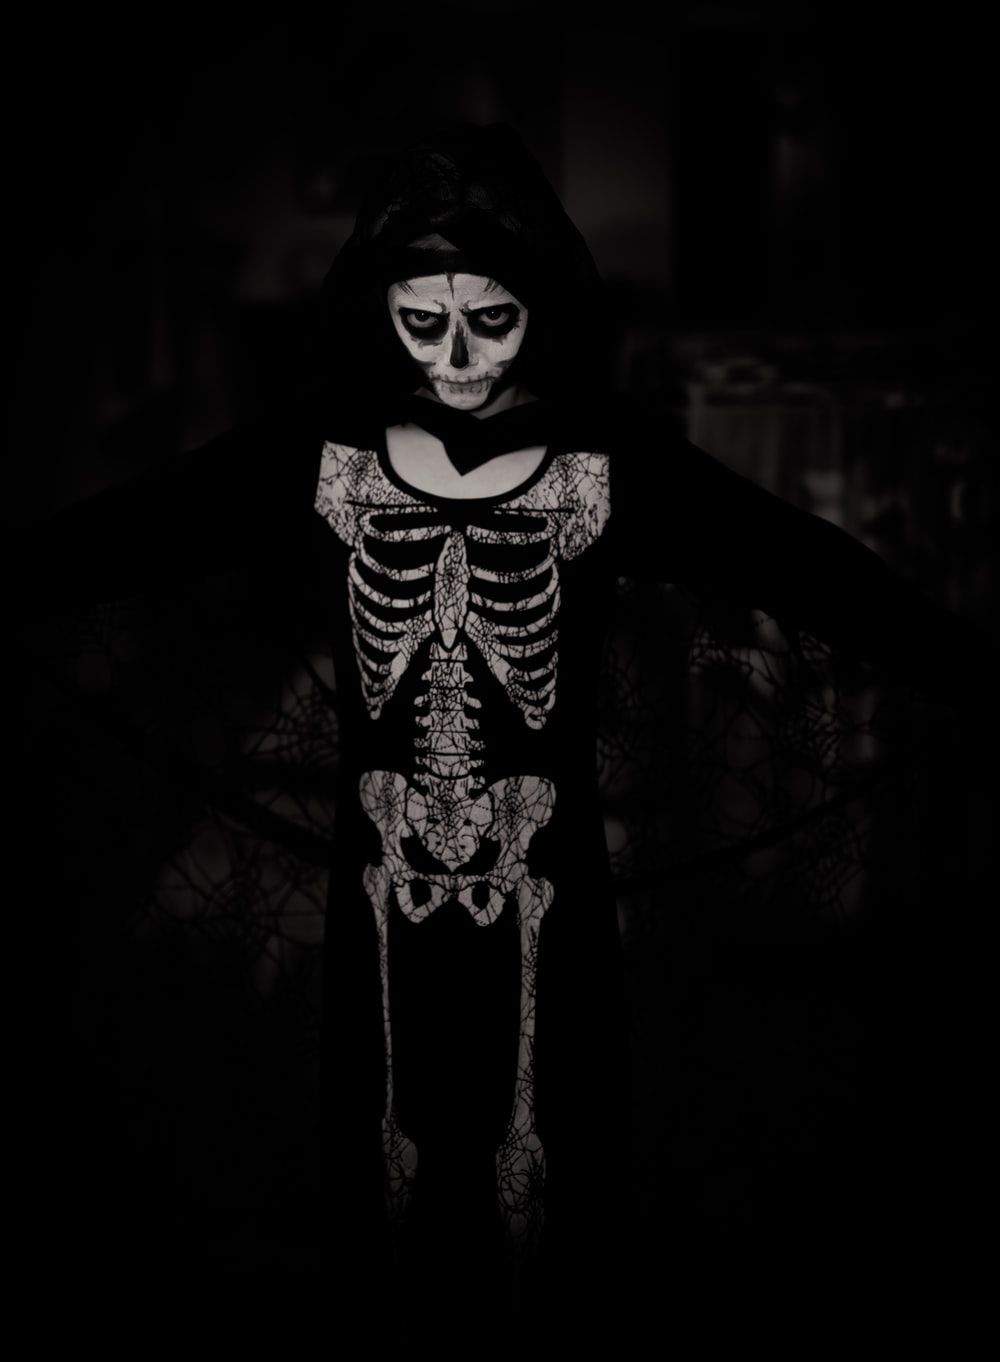 Skeleton Picture [HD]. Download Free Image